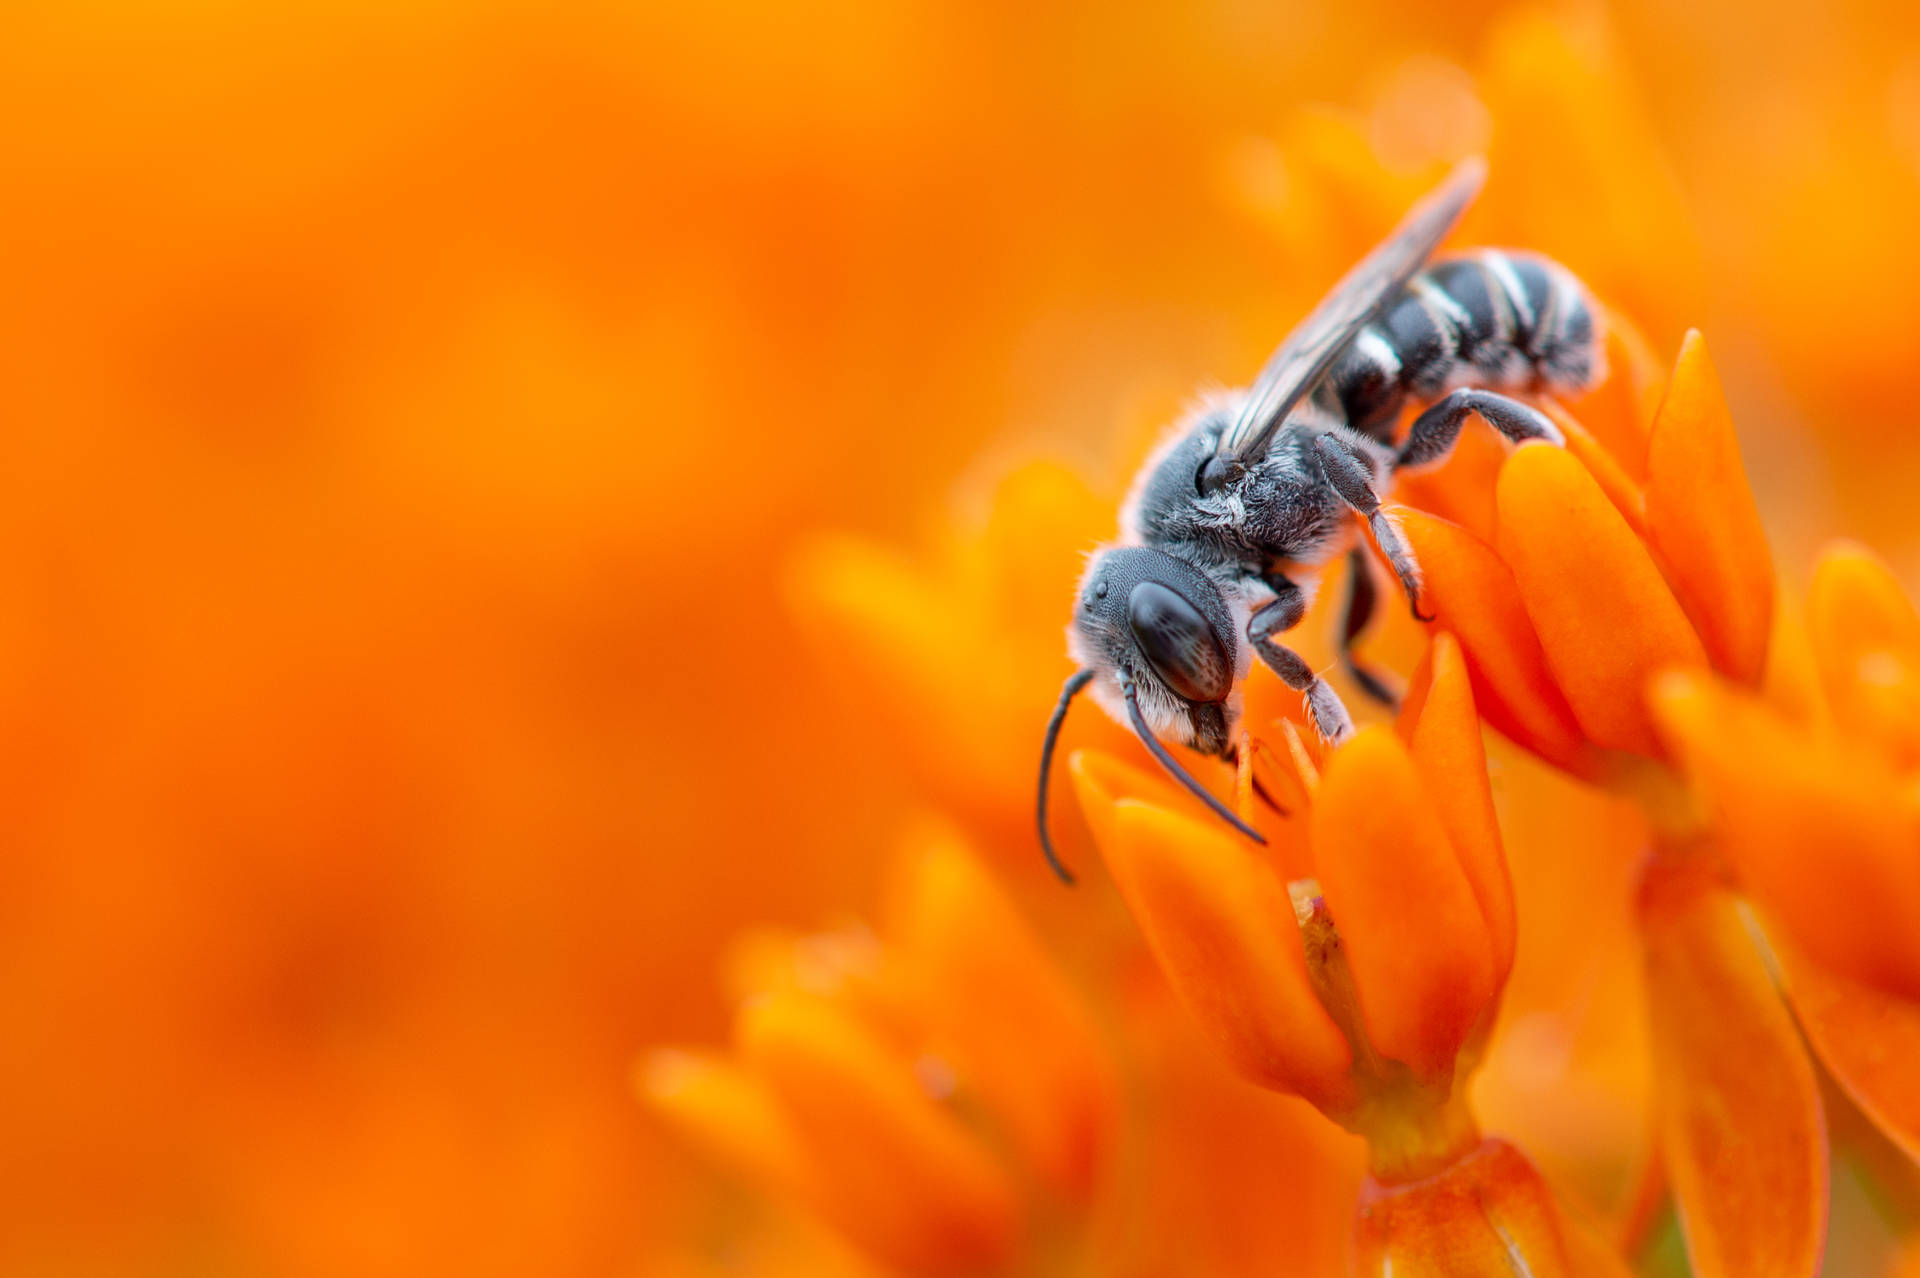 Insect On Vibrant Orange Flower Background